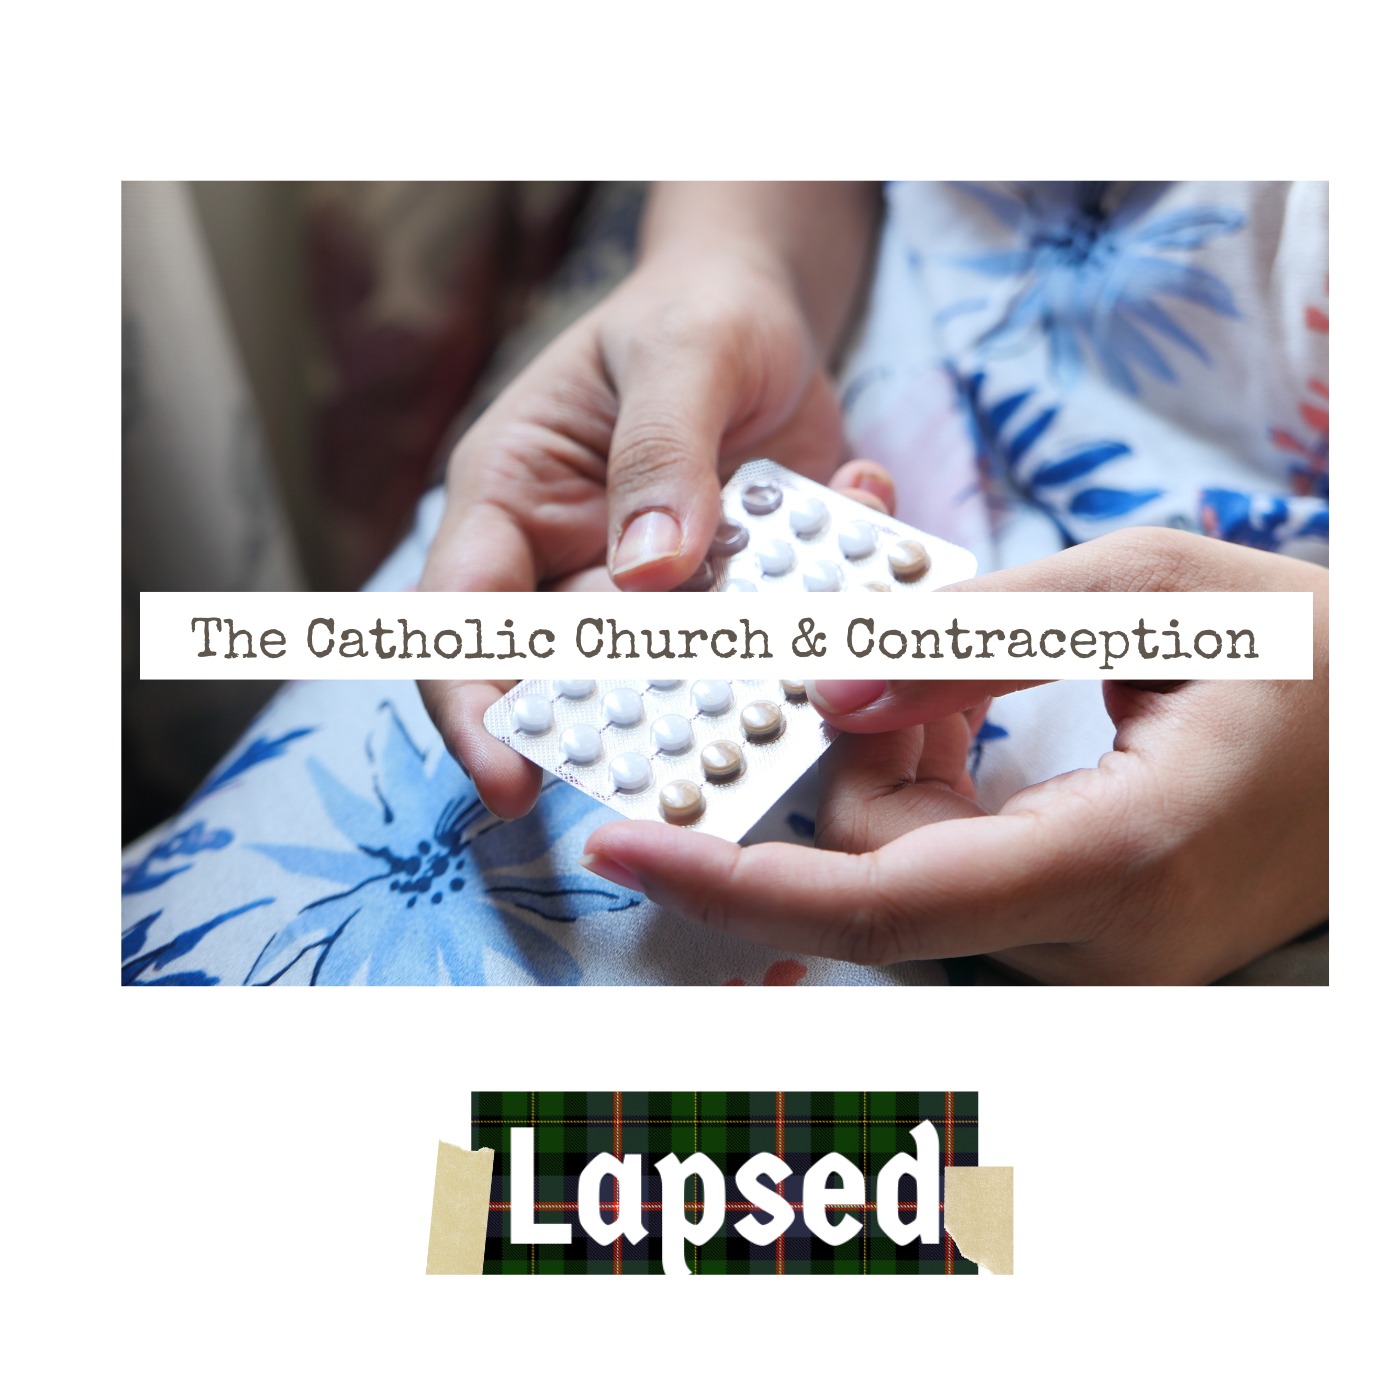 The Catholic Church & Contraception